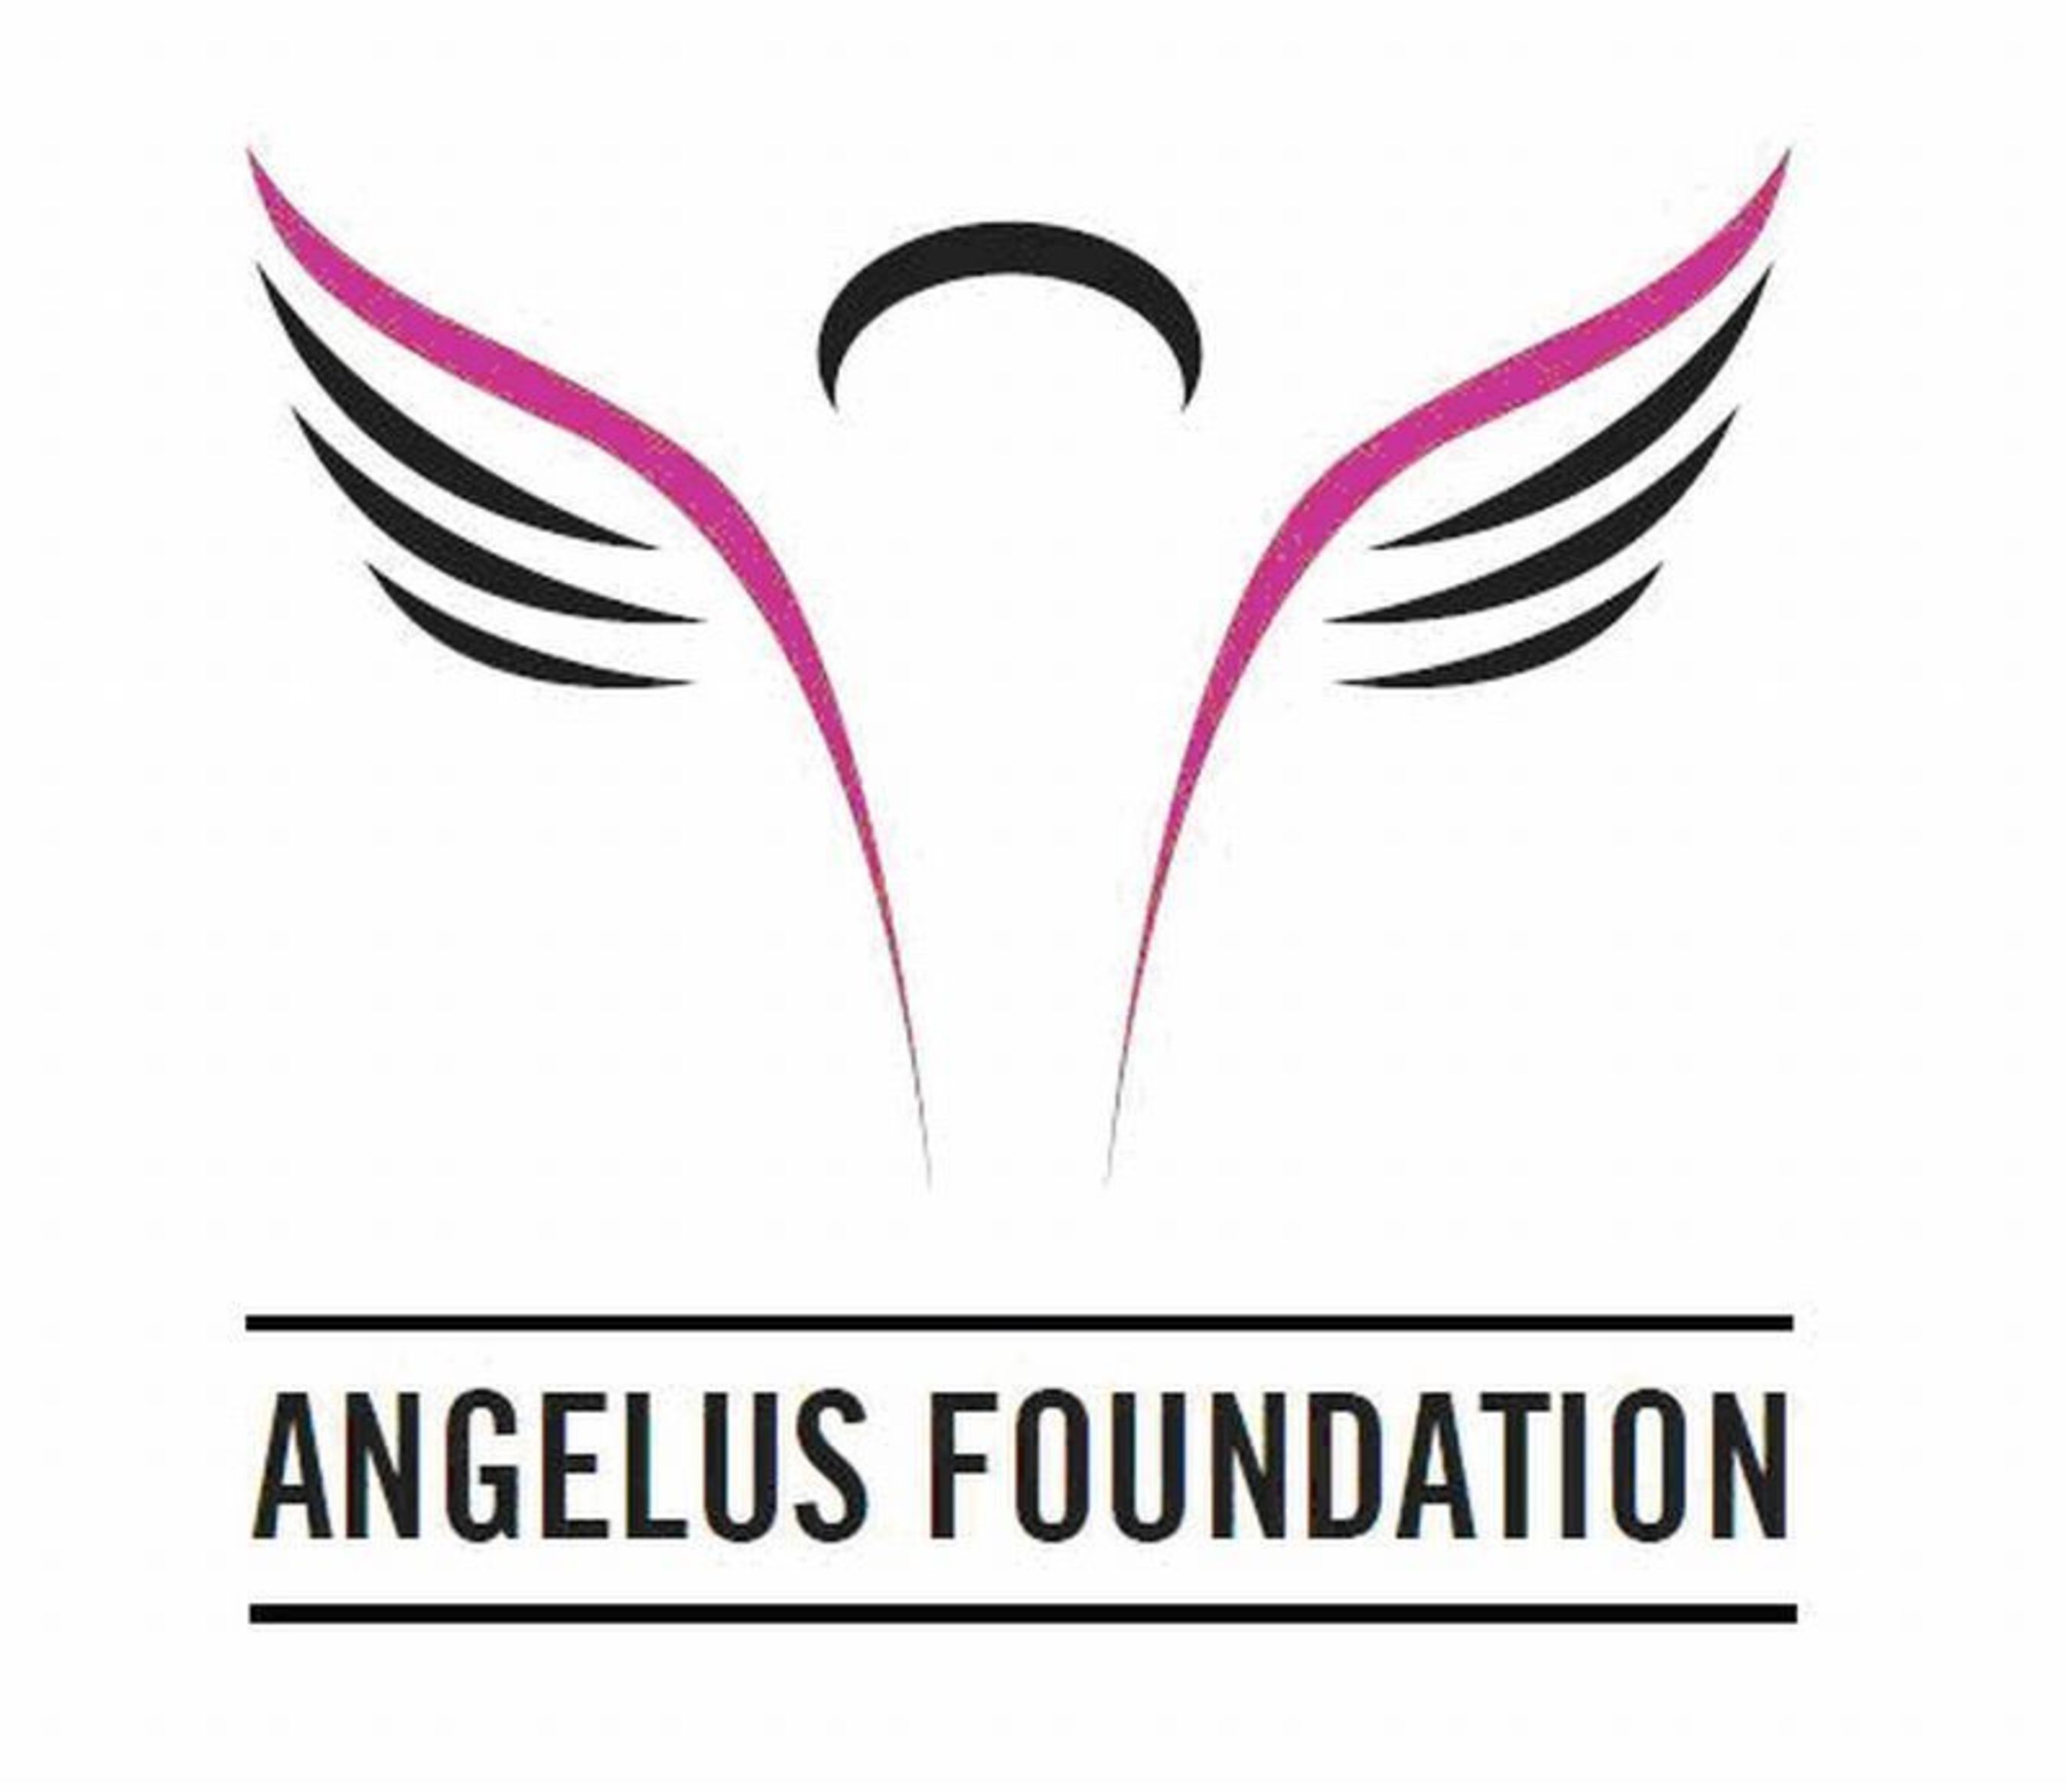 Angelus Foundation (PRNewsFoto/Angelus Foundation)